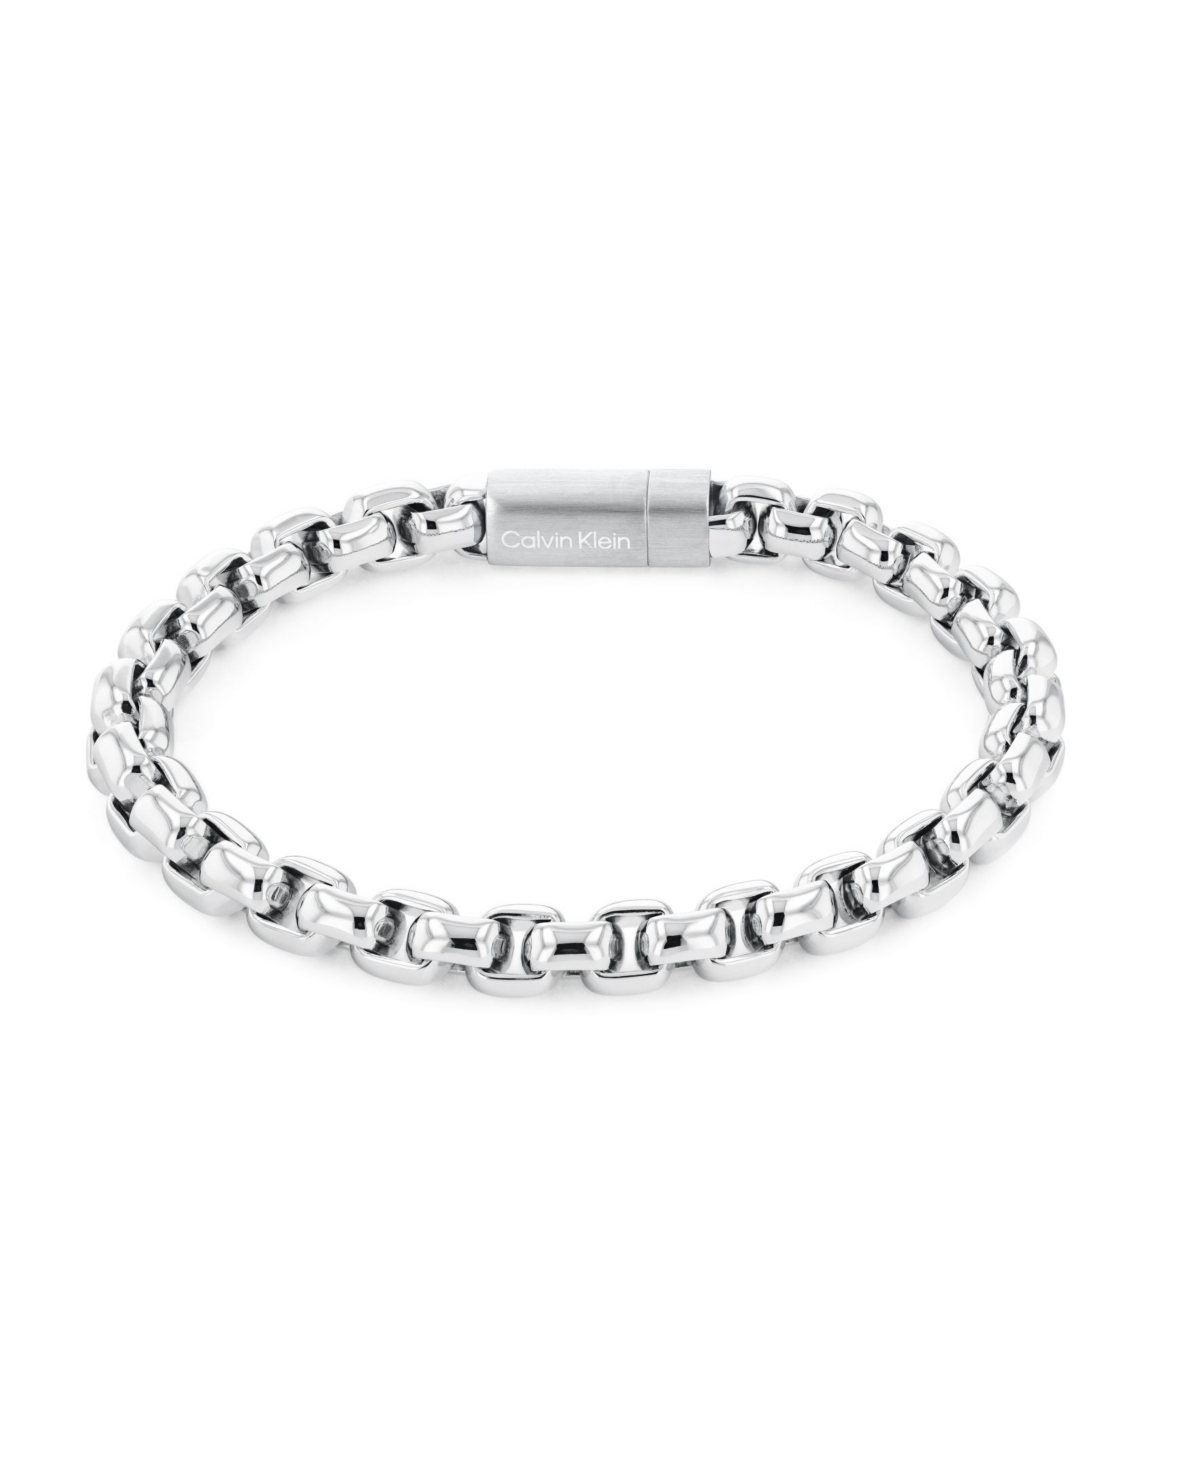 Men's Stainless Steel Chain Bracelet - Silver-Tone